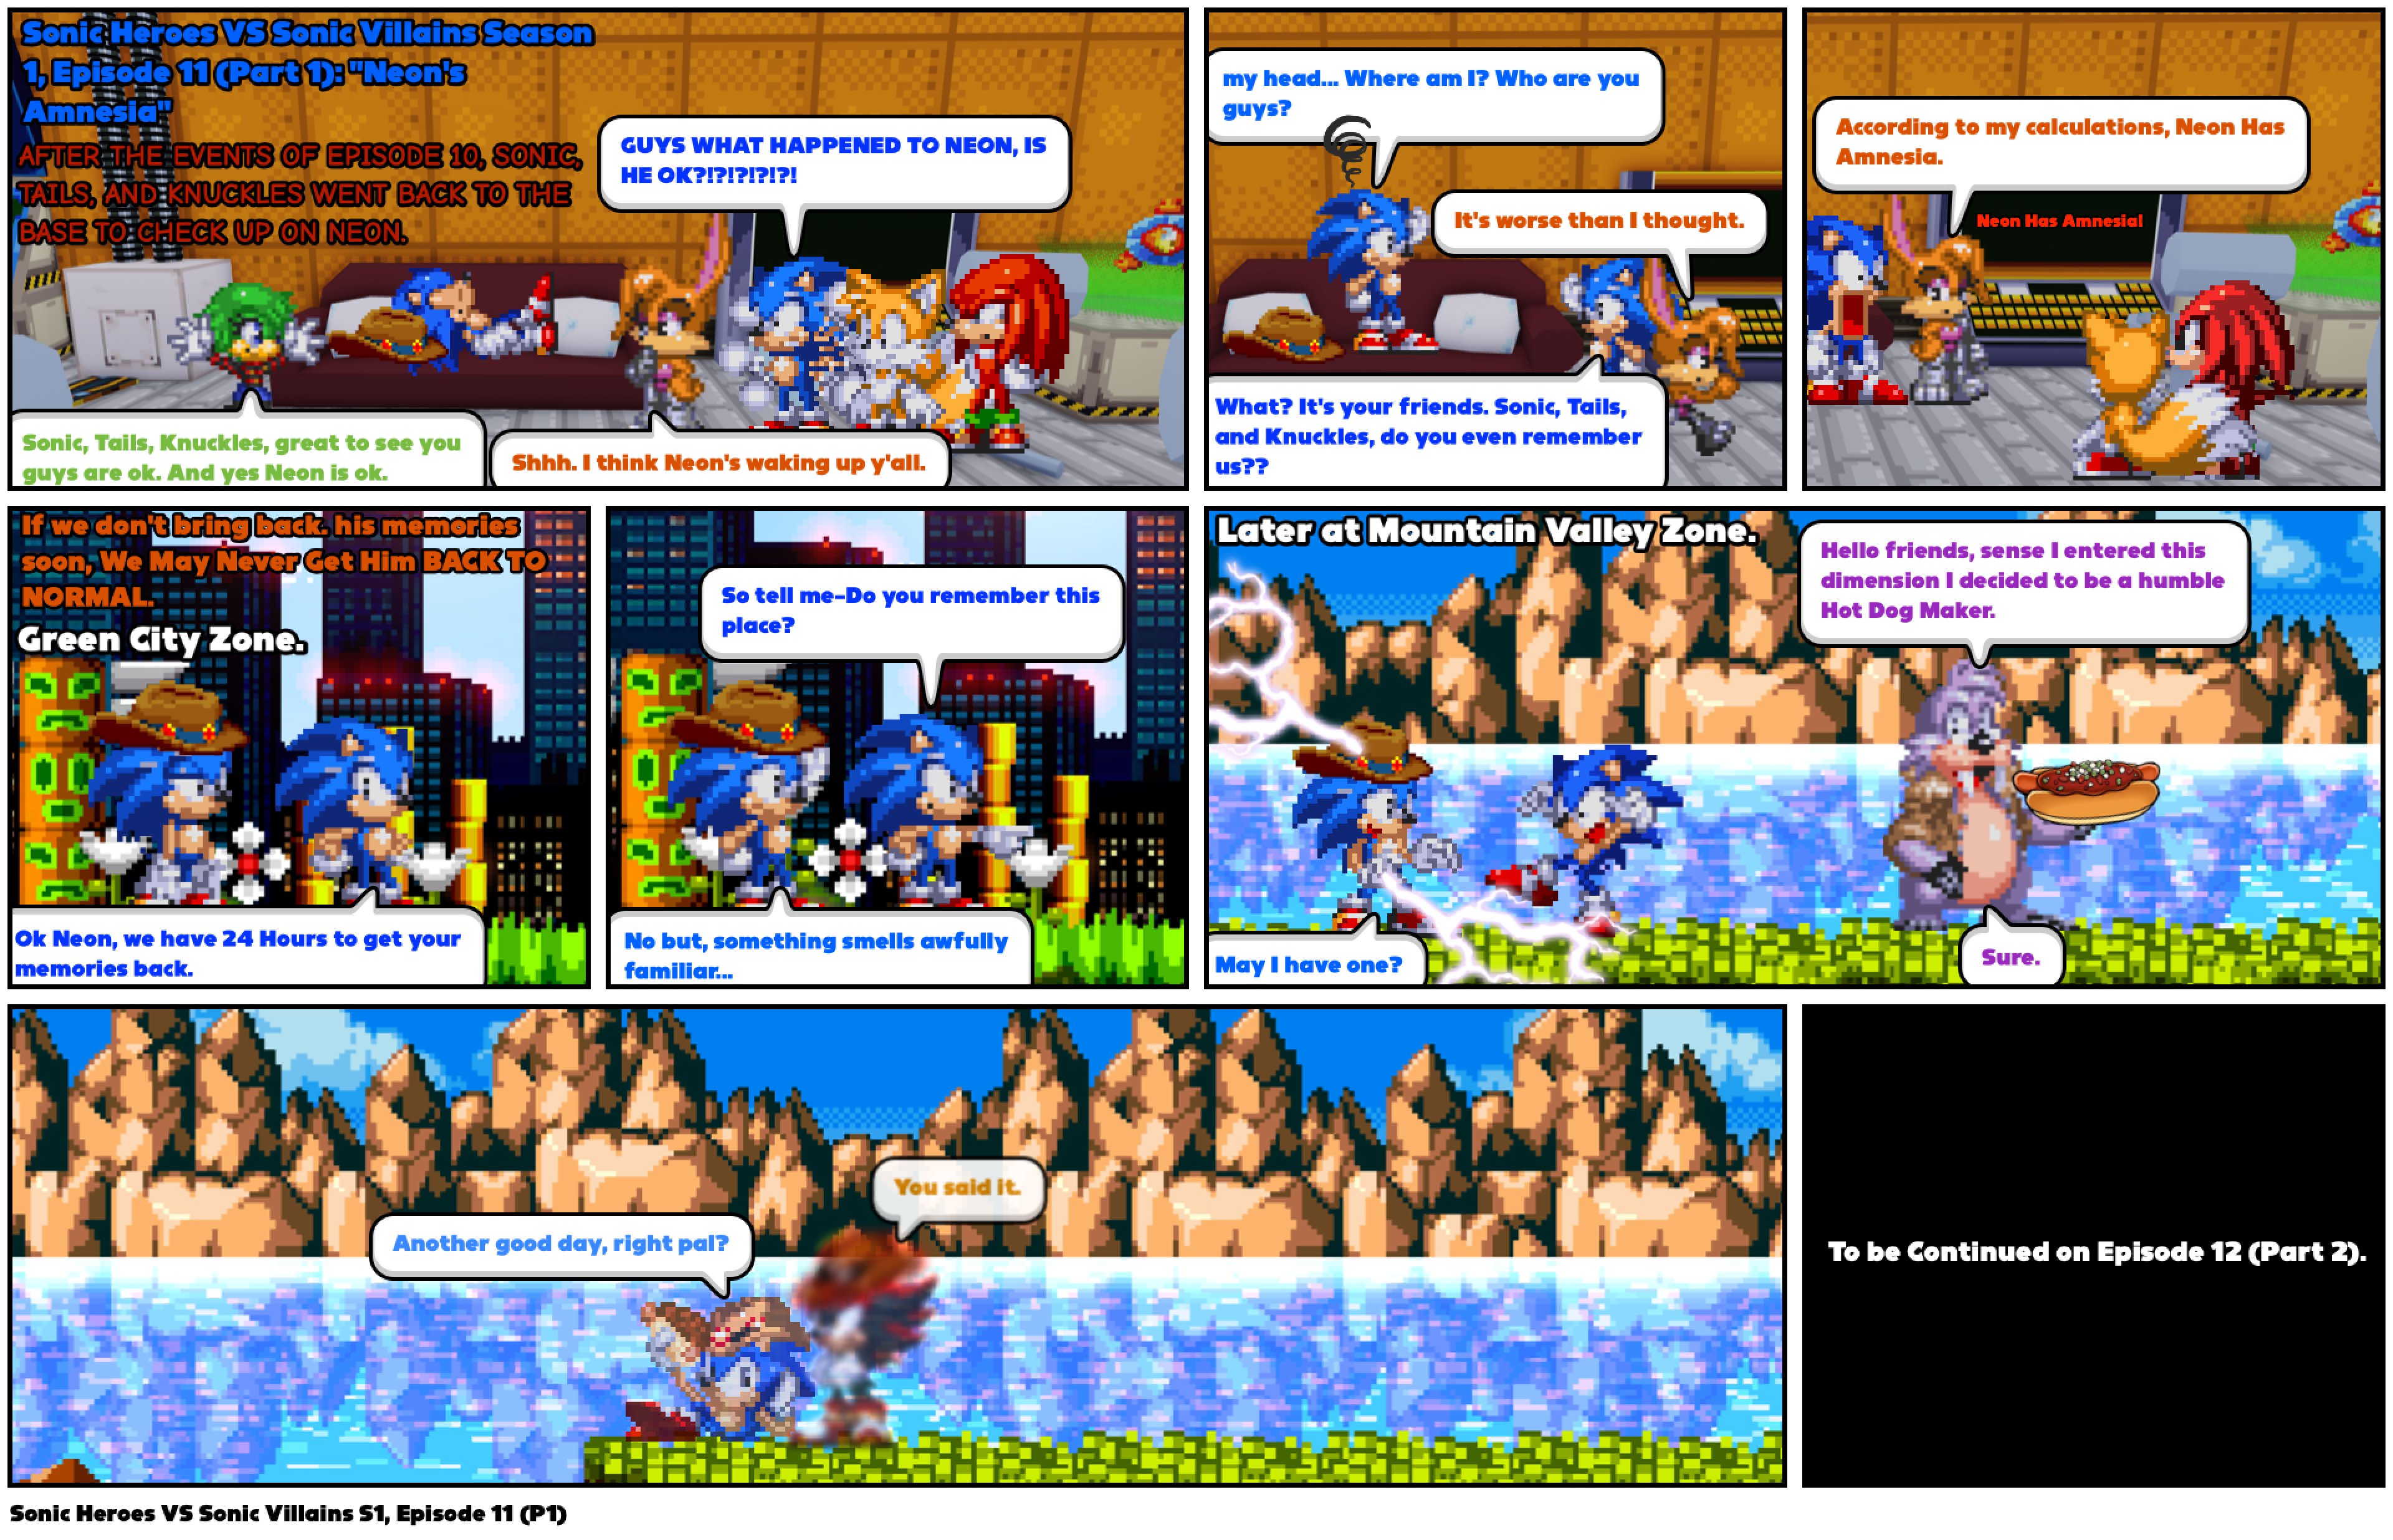 Sonic Heroes VS Sonic Villains S1, Episode 11 (P1)